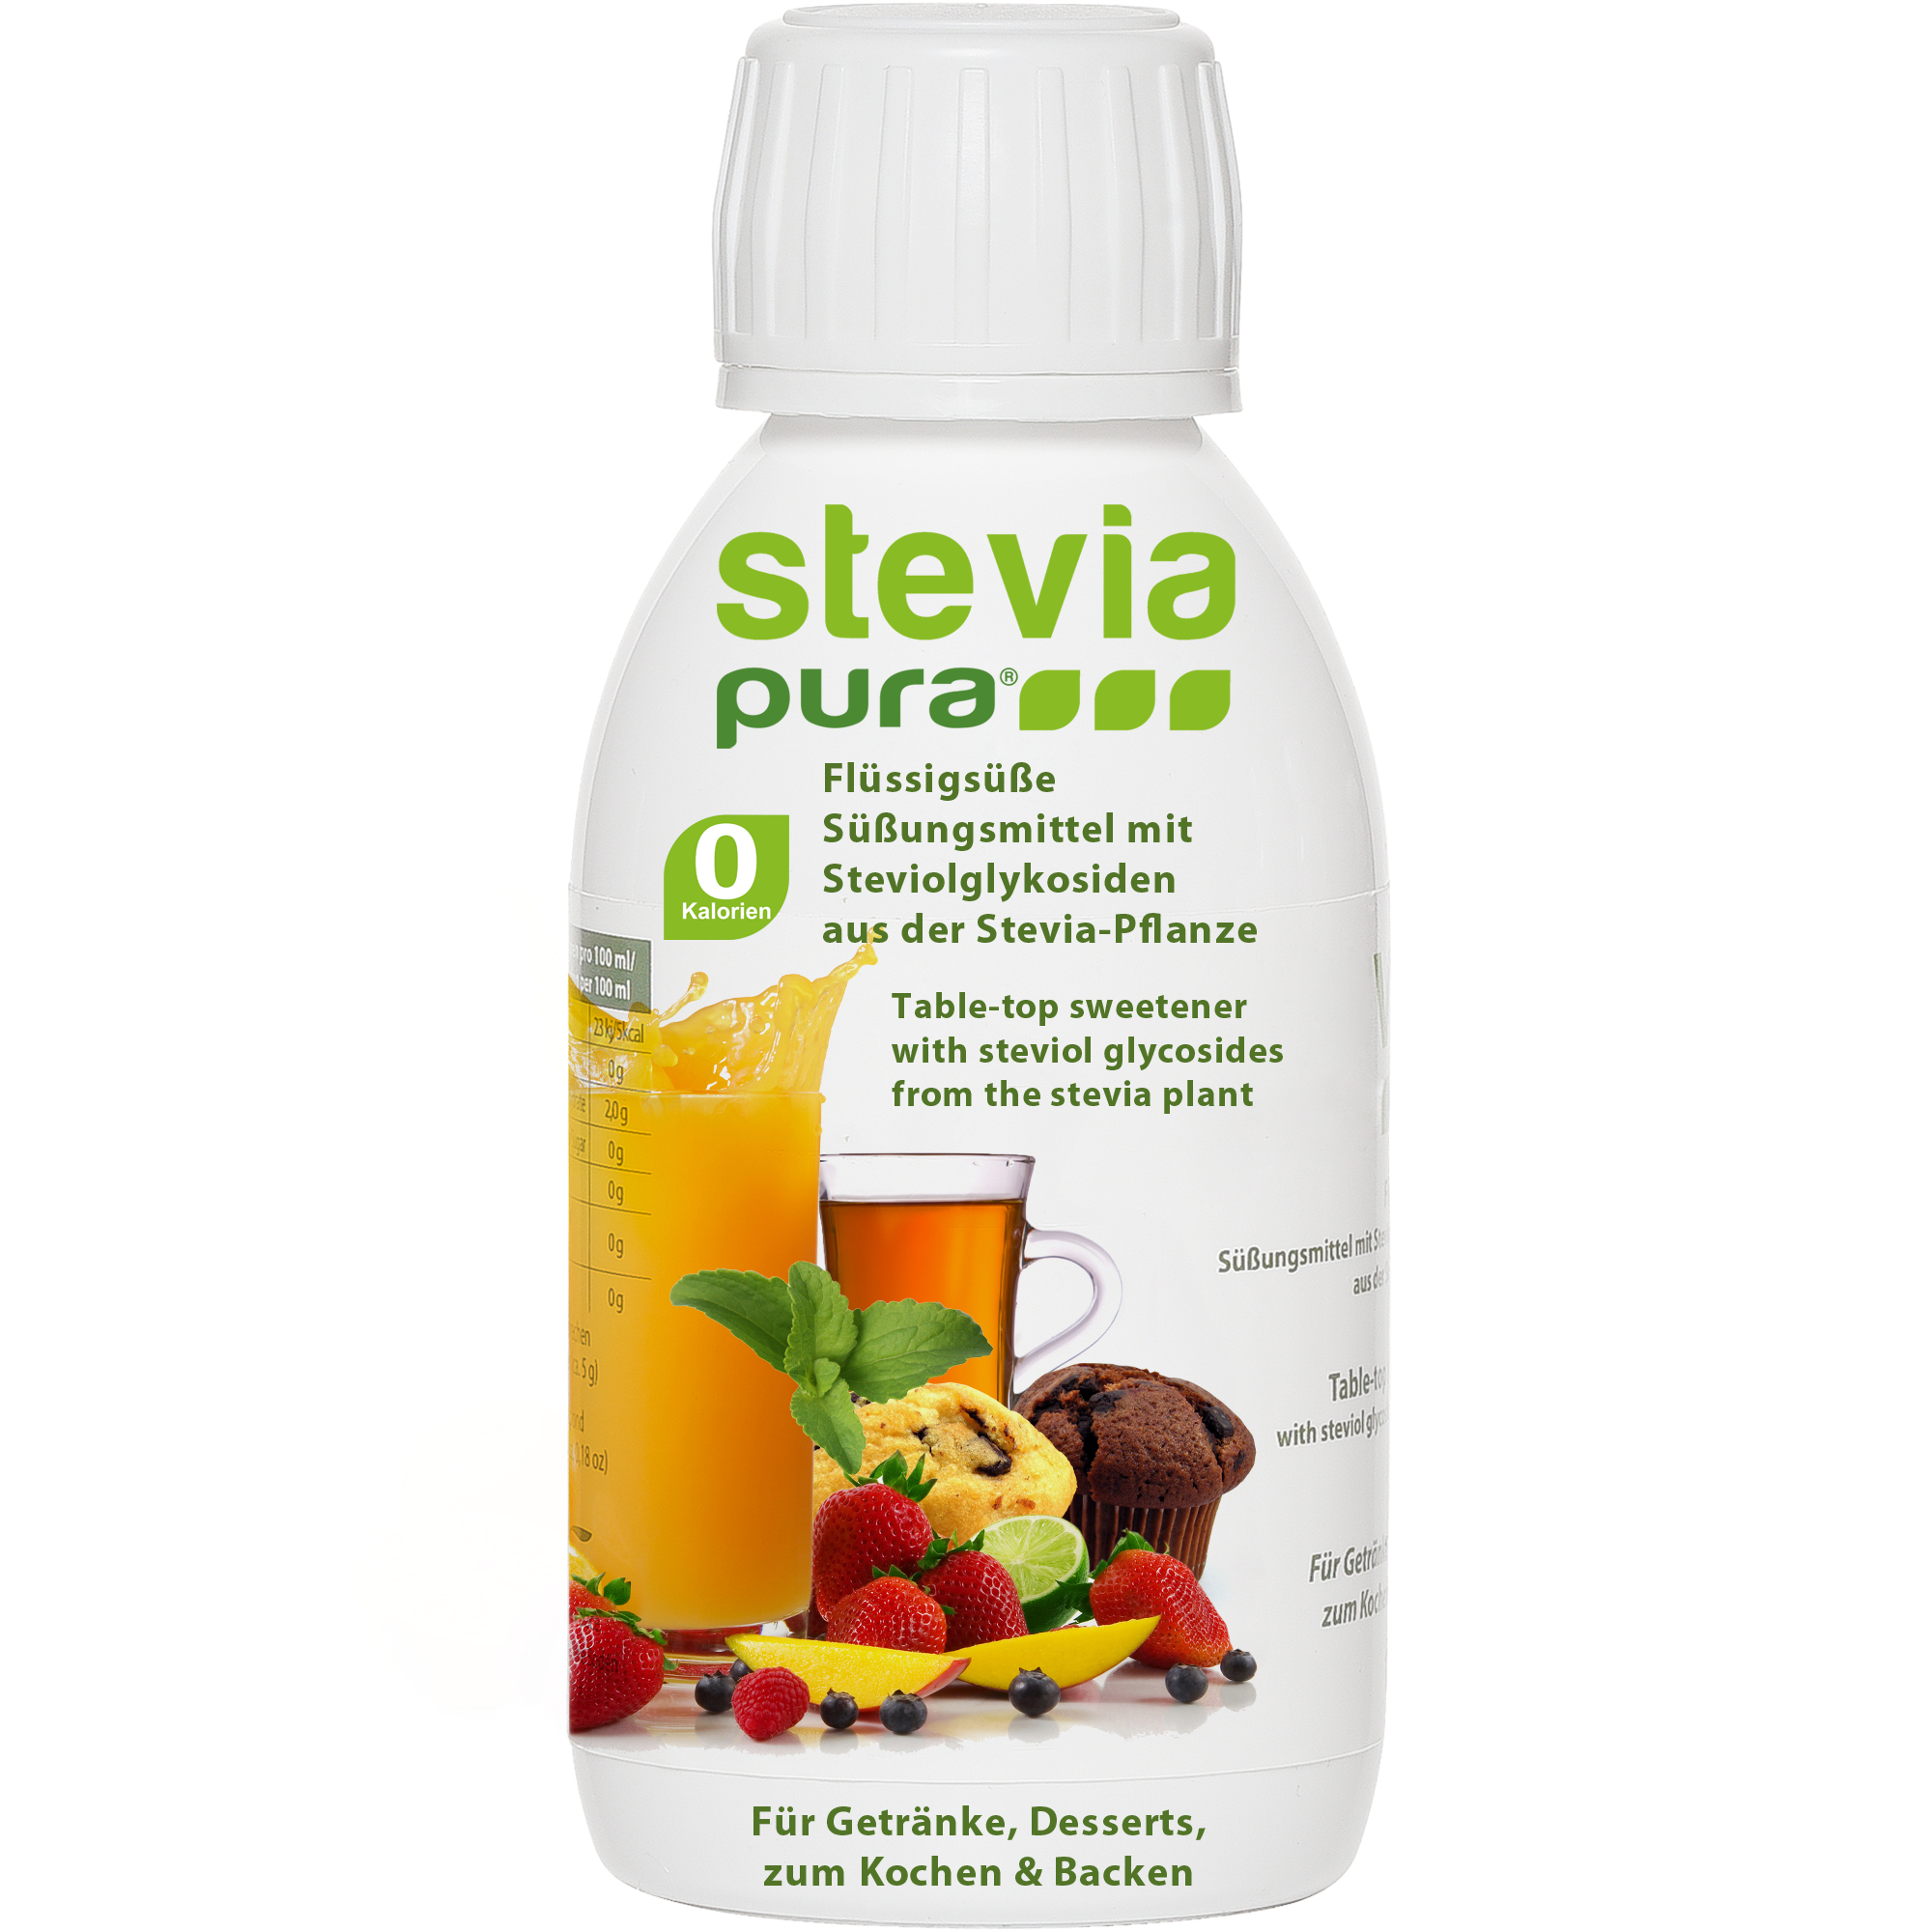 Un producto de calidad del Stevia Group: el edulcorante líquido steviapura.